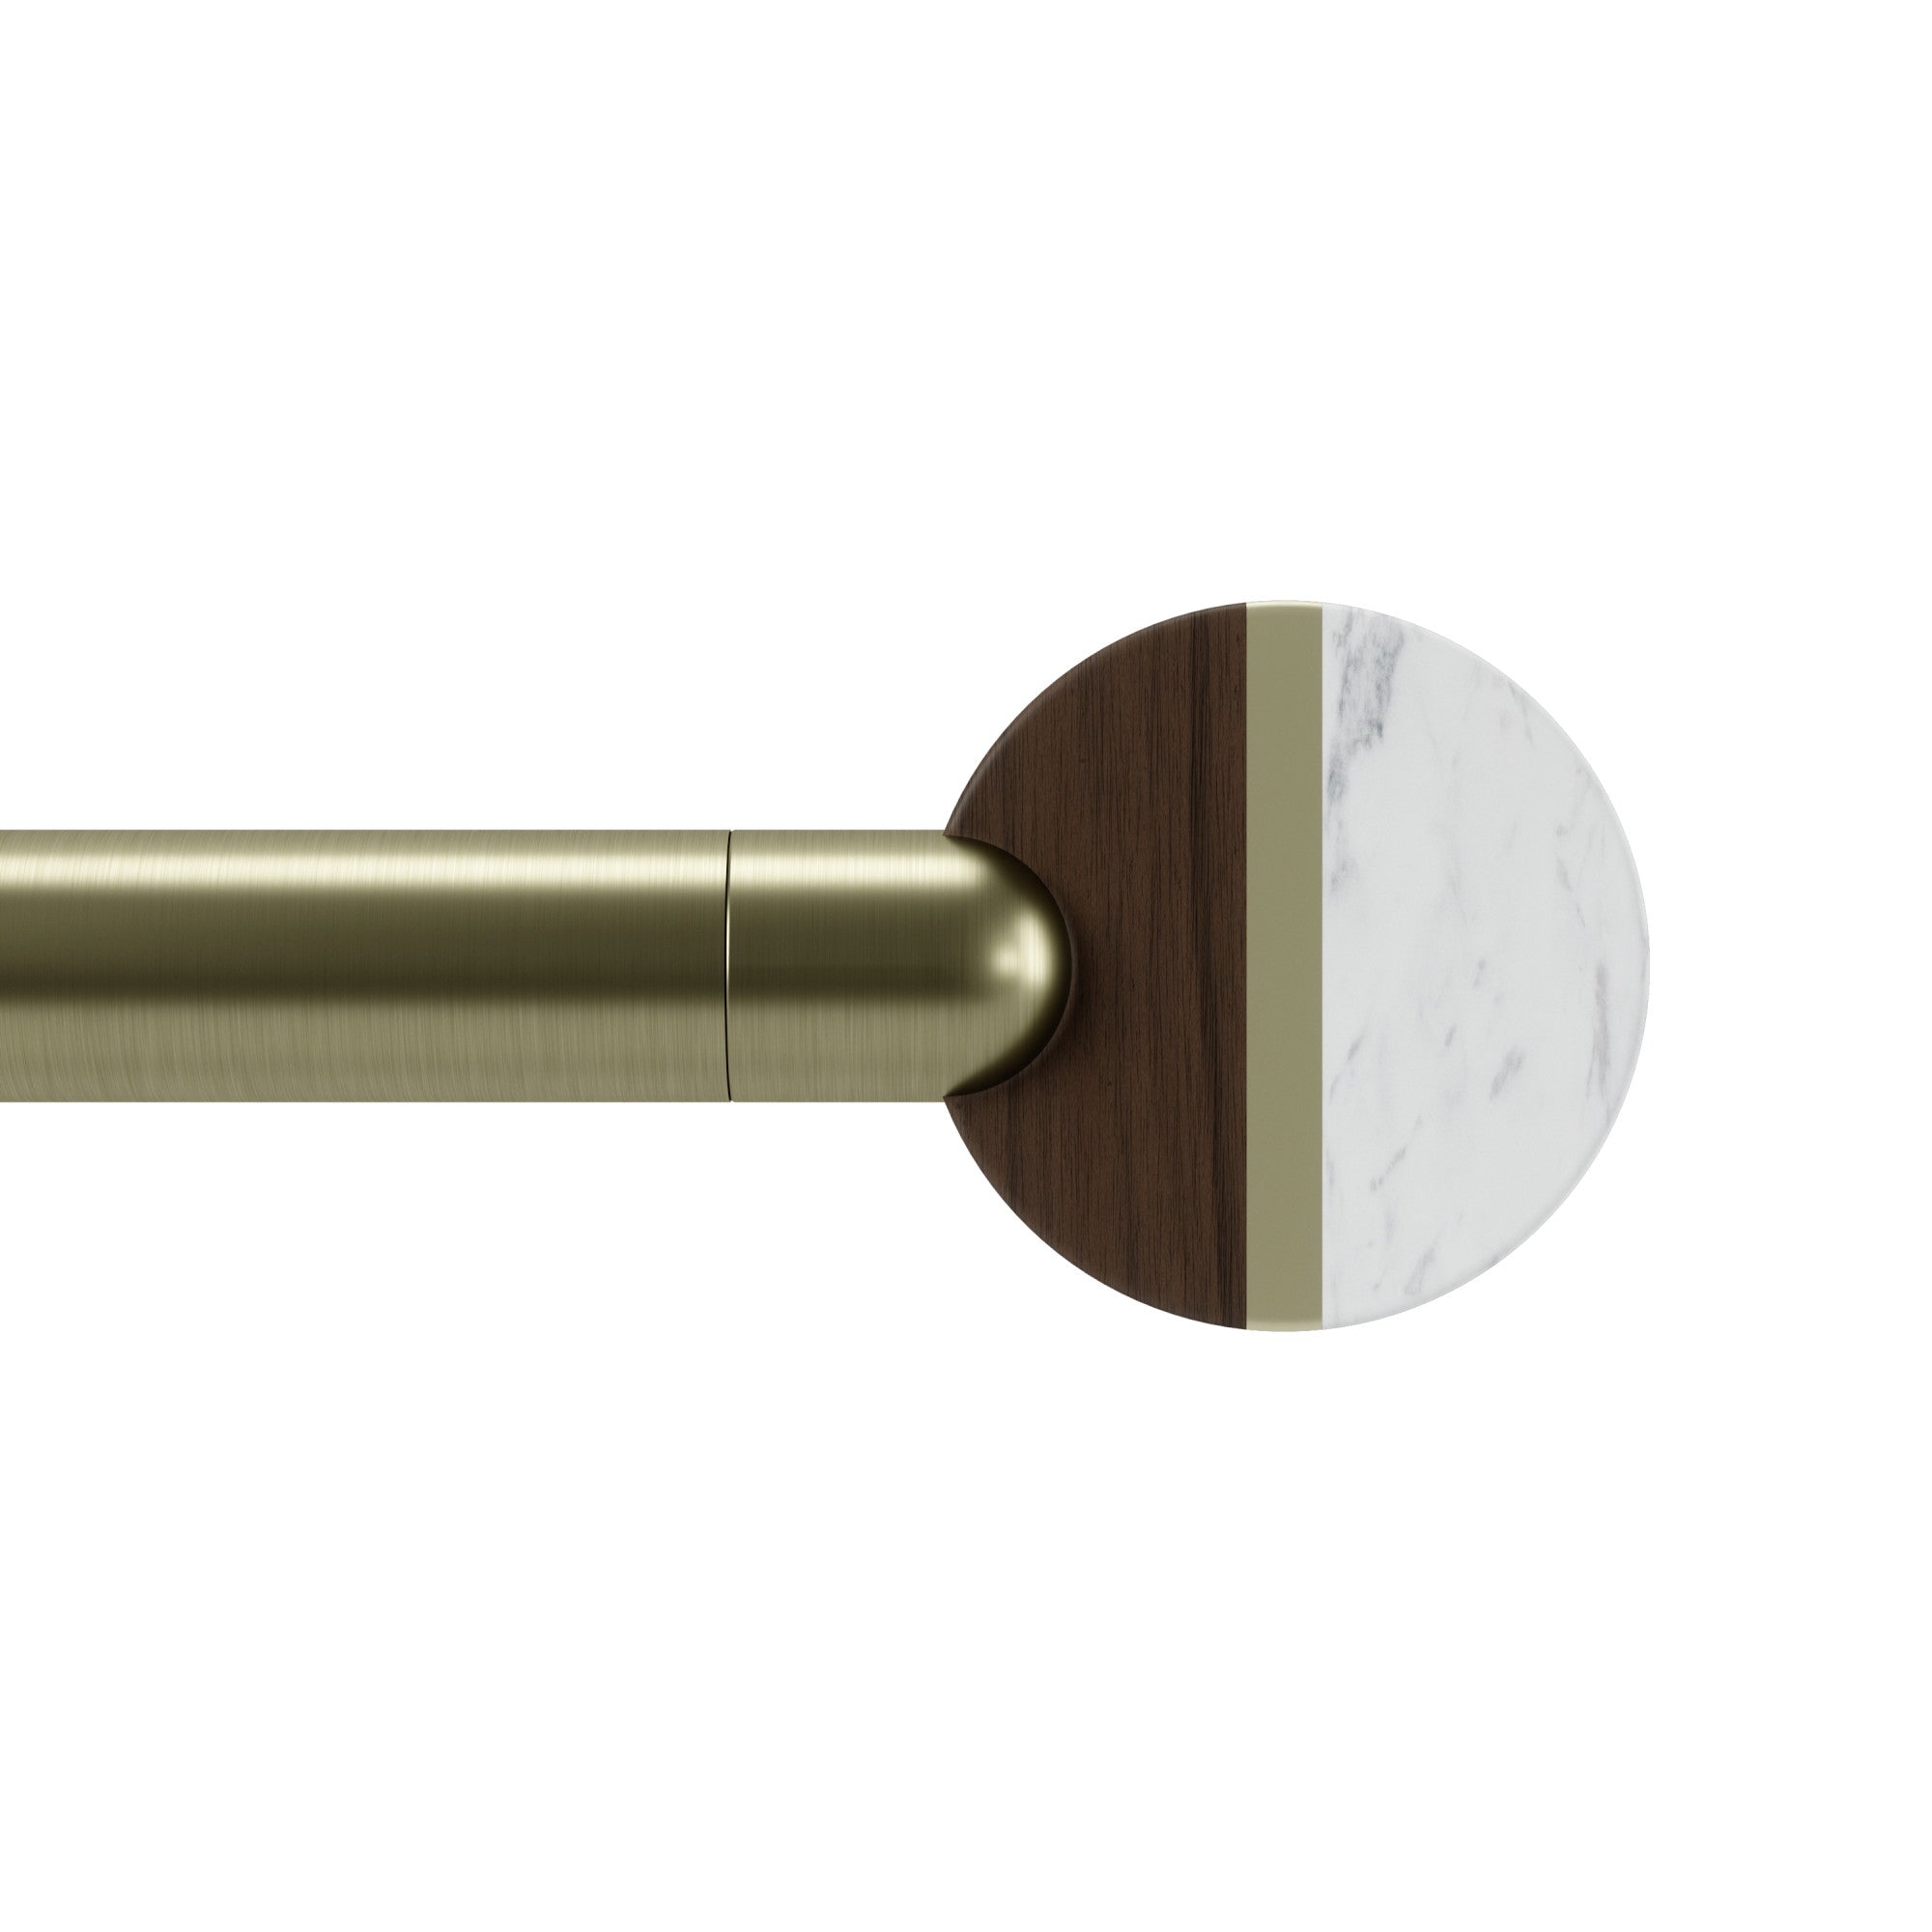 Single Curtain Rods | color: Brushed-Brass | size: 36-72"""" (91-183cm) | diameter: 1"""" (2.5cm)